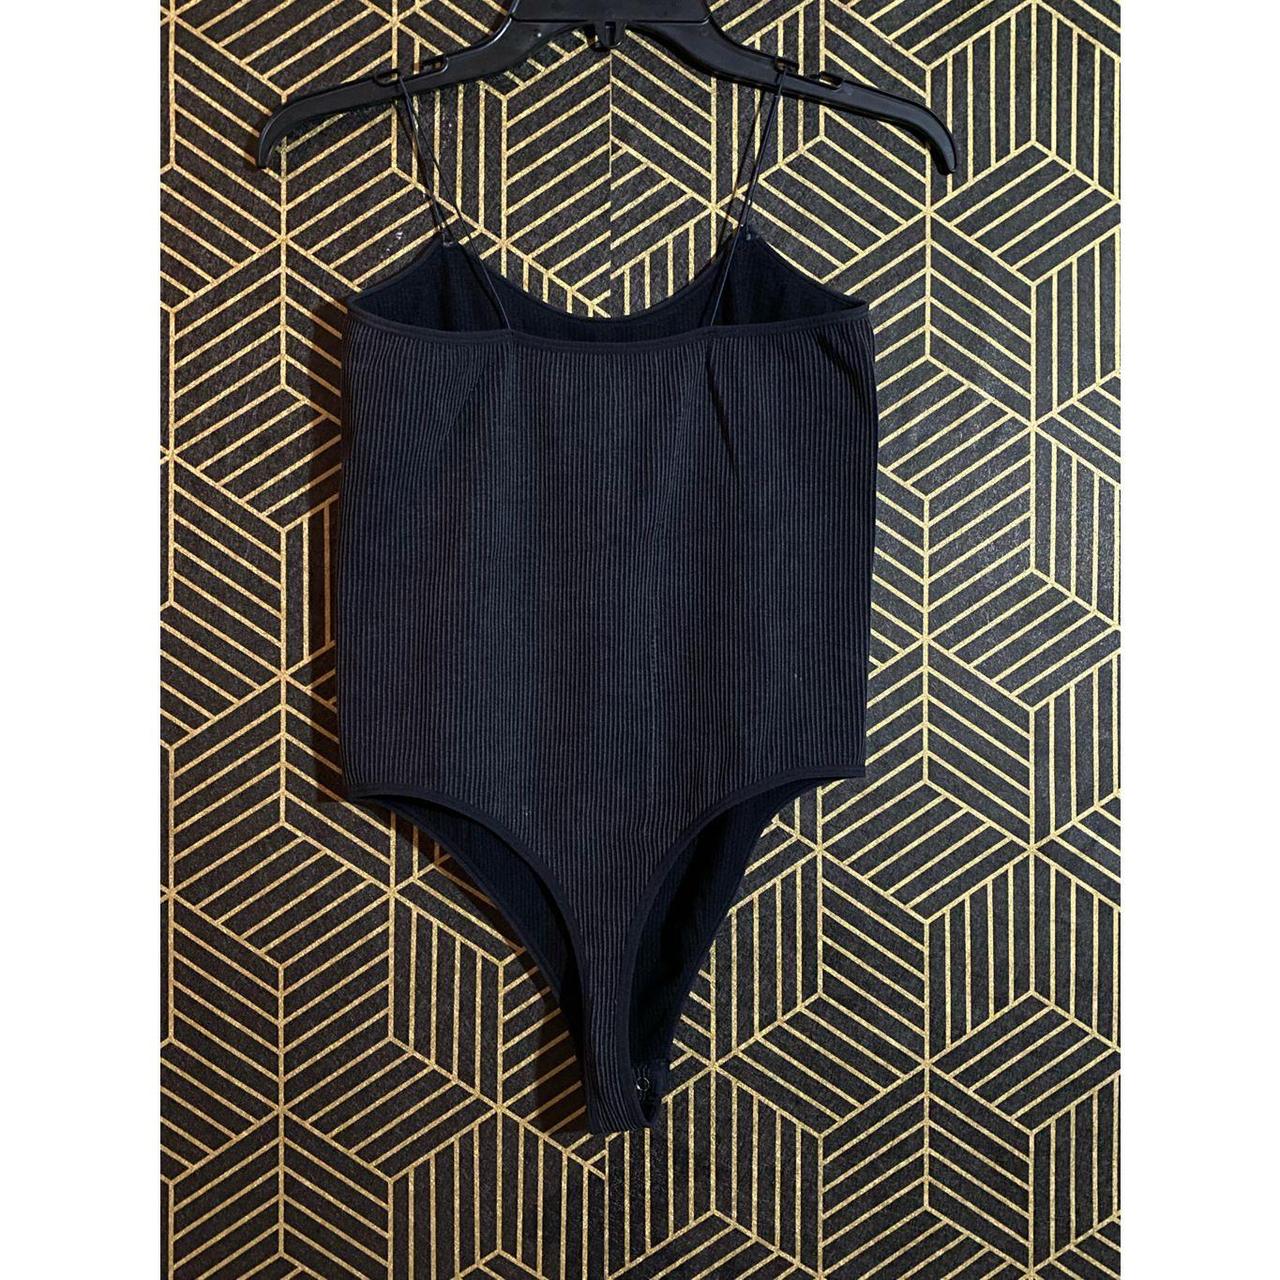 Product Image 2 - L/XL
Black
Bodysuit
Tank top #Bodysuit #TankTop #Sexy